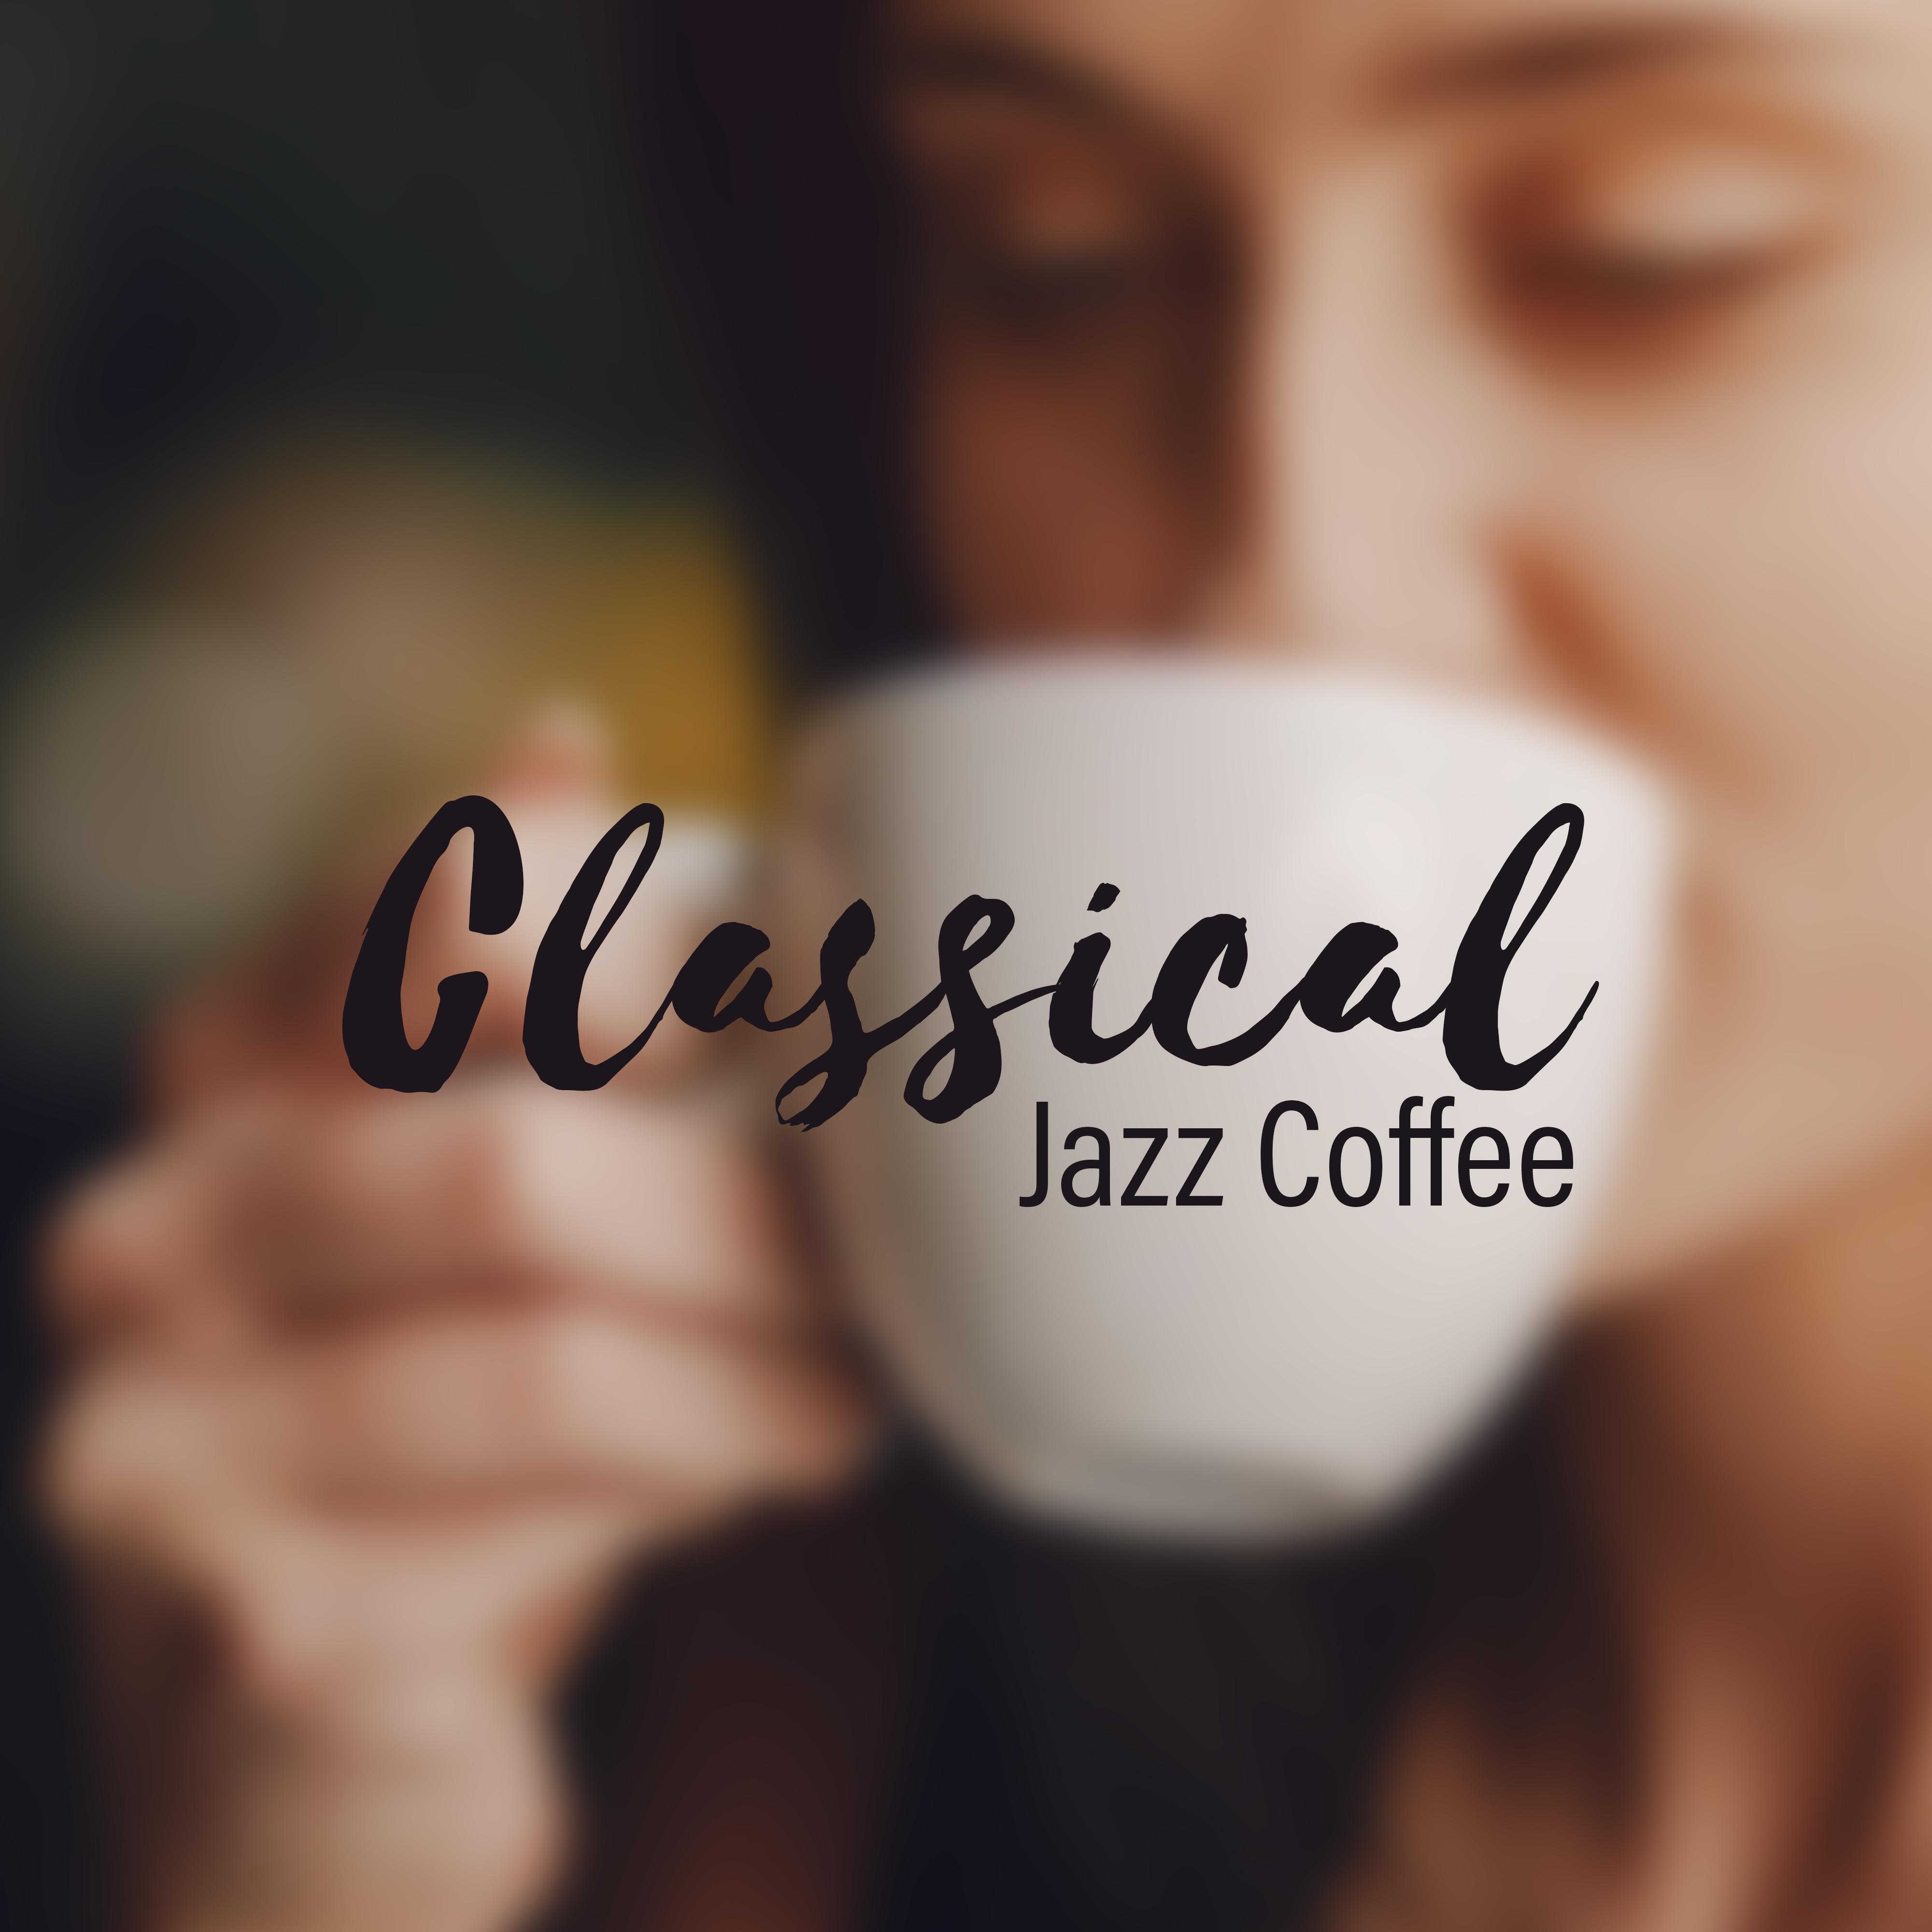 Classical Jazz Coffee